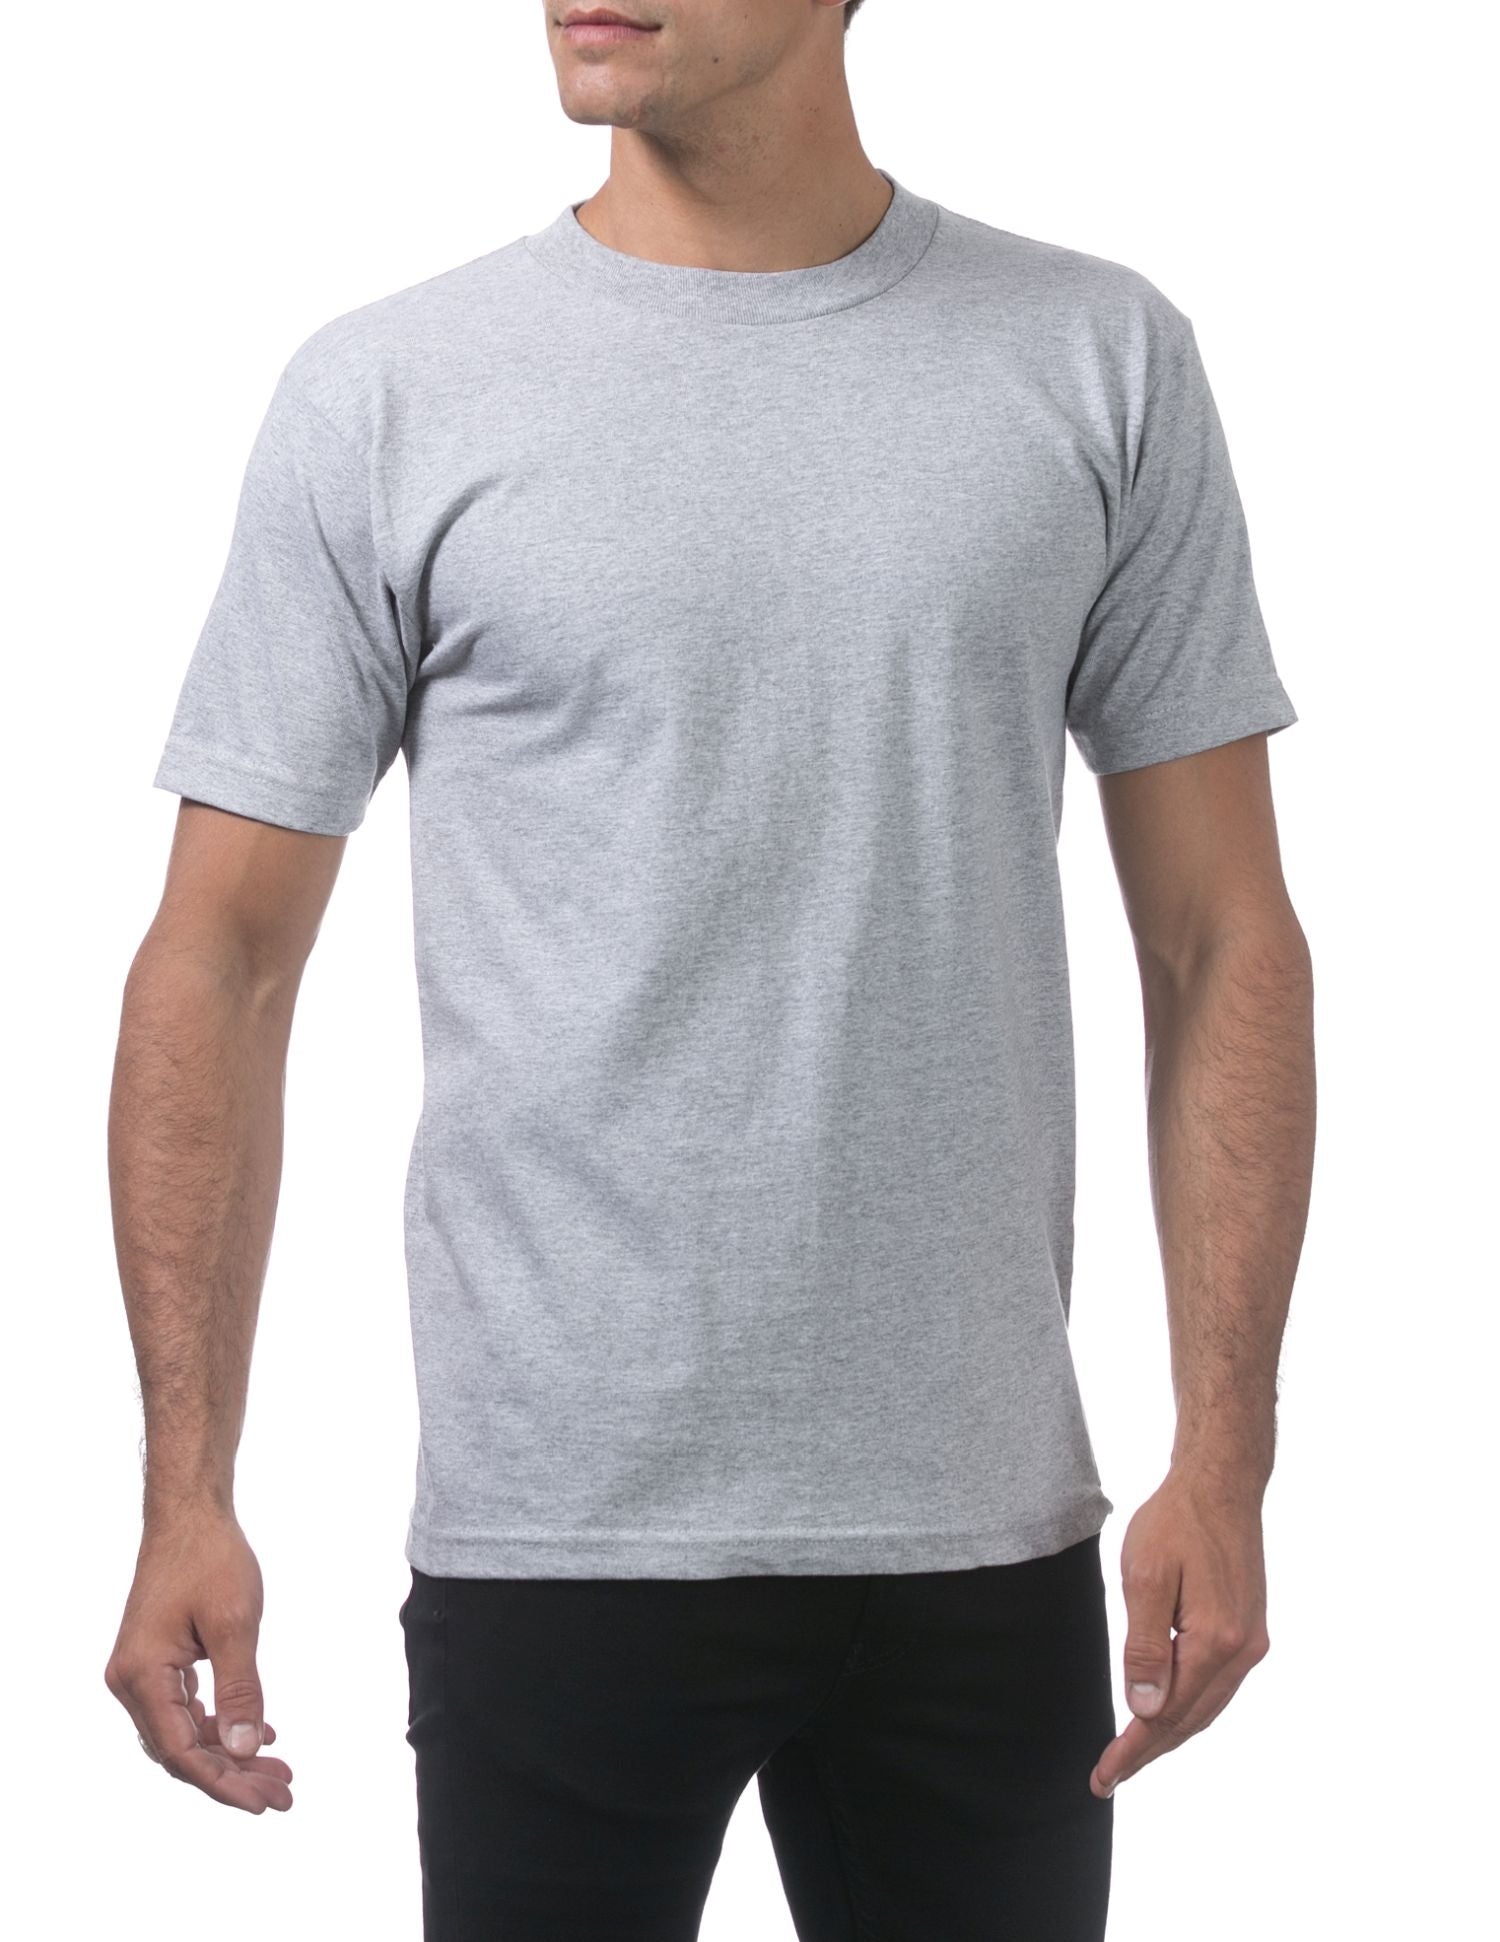 Pro Club Men's Comfort Cotton Short Sleeve T-Shirt - Heather Gray - Medium - Pro-Distributing